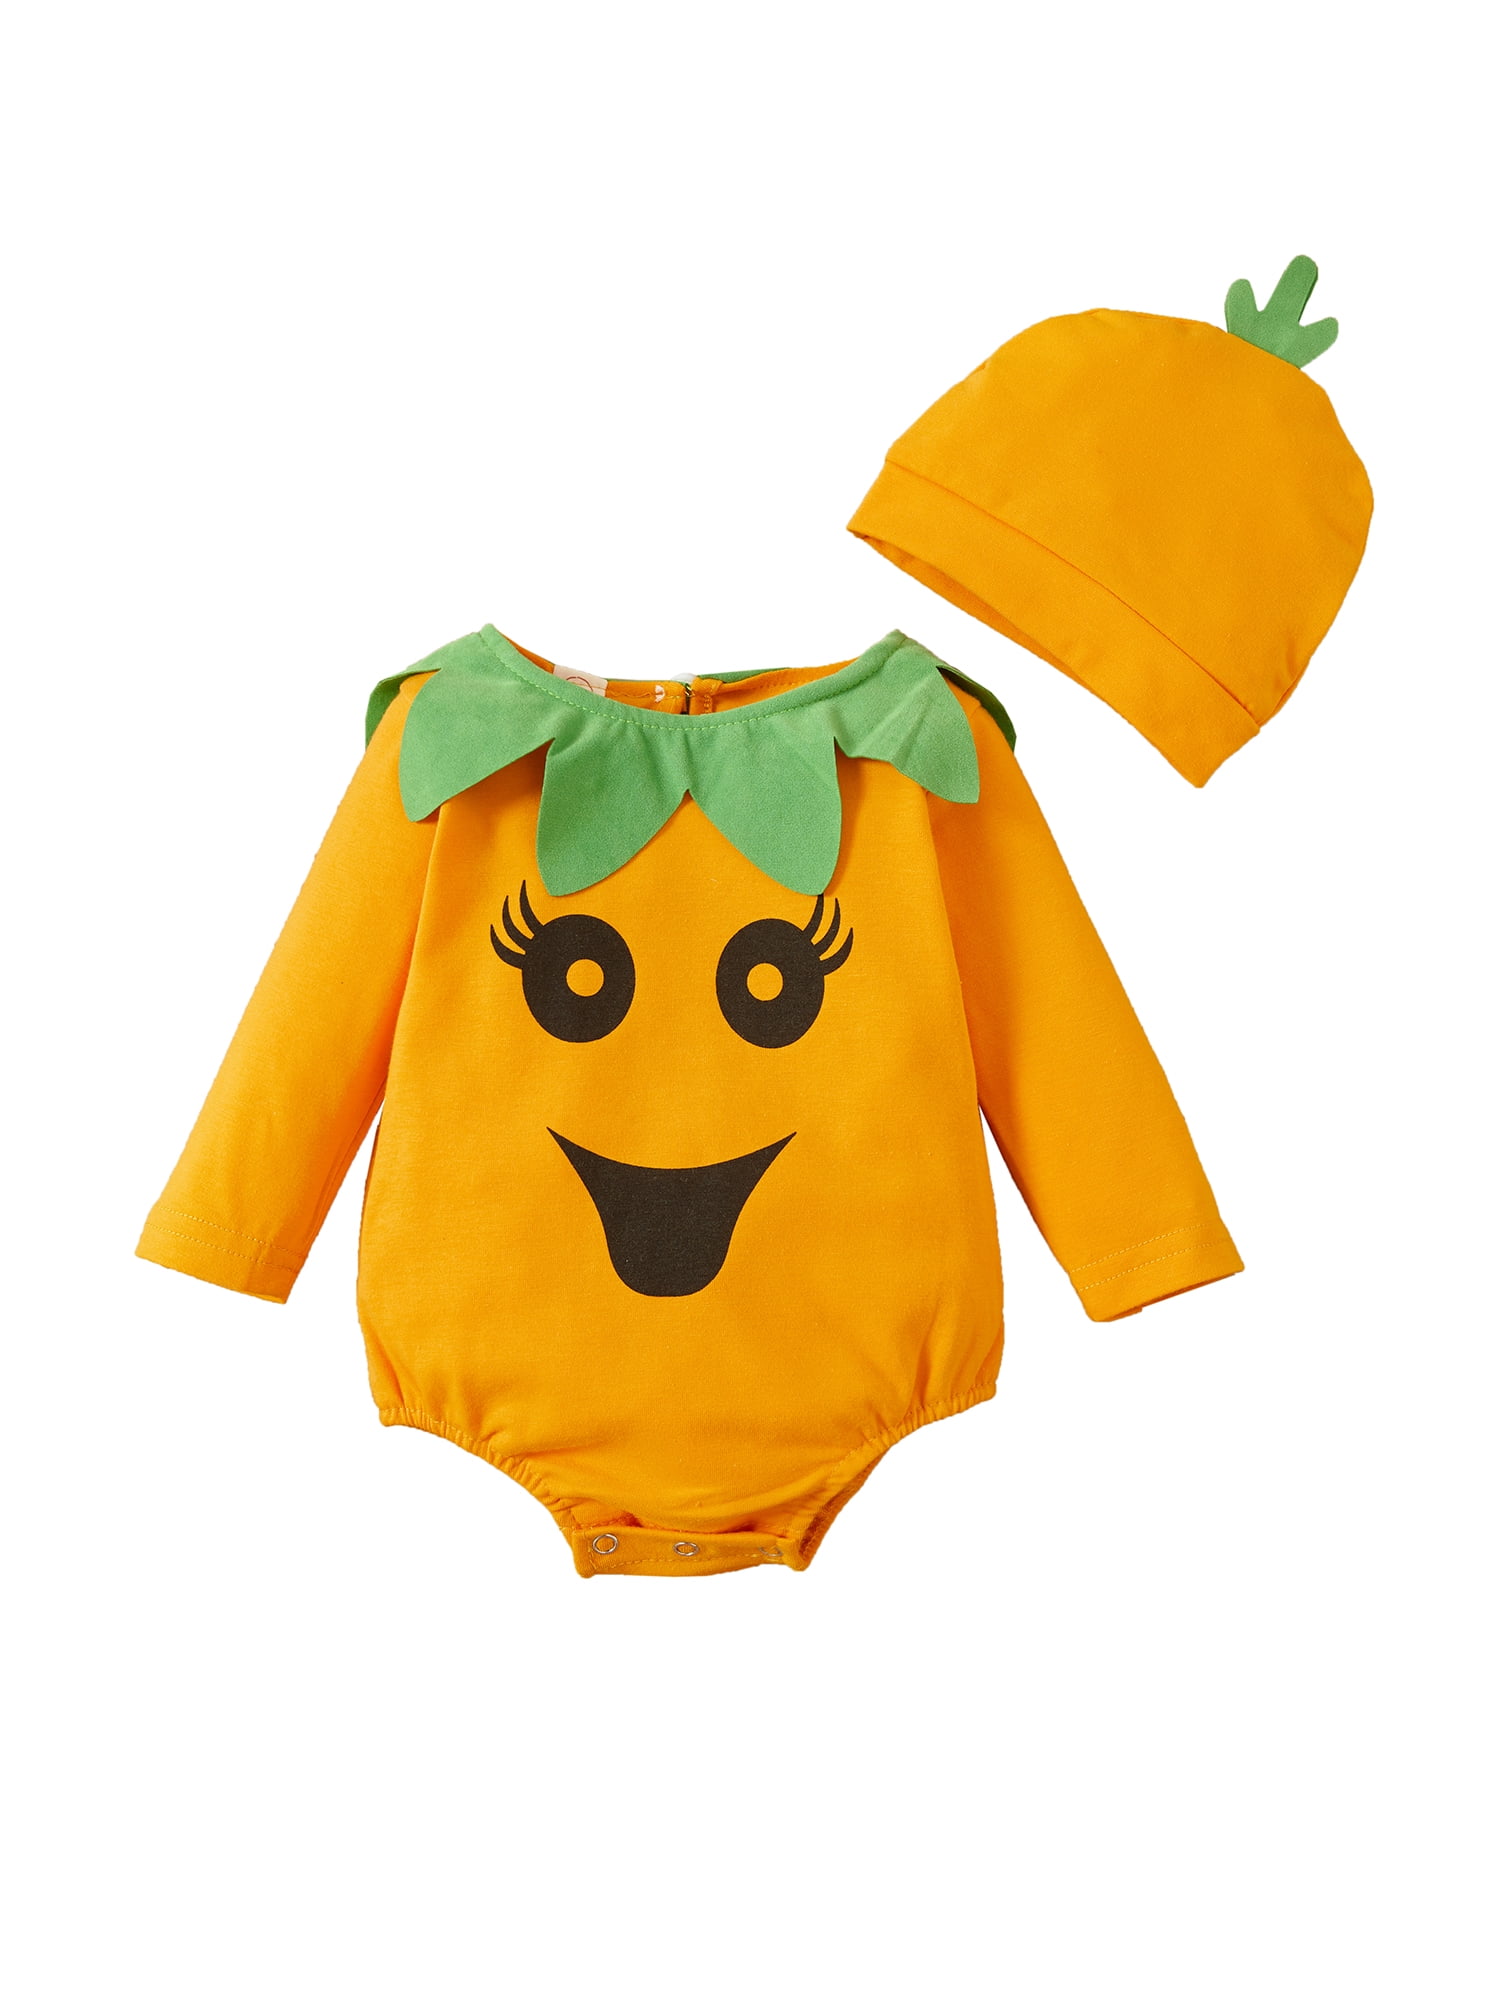 NEWBABY Happy Smiley Face Emoticon Unisex Baby Short Sleeves Romper Bodysuit For 0-24m Baby 